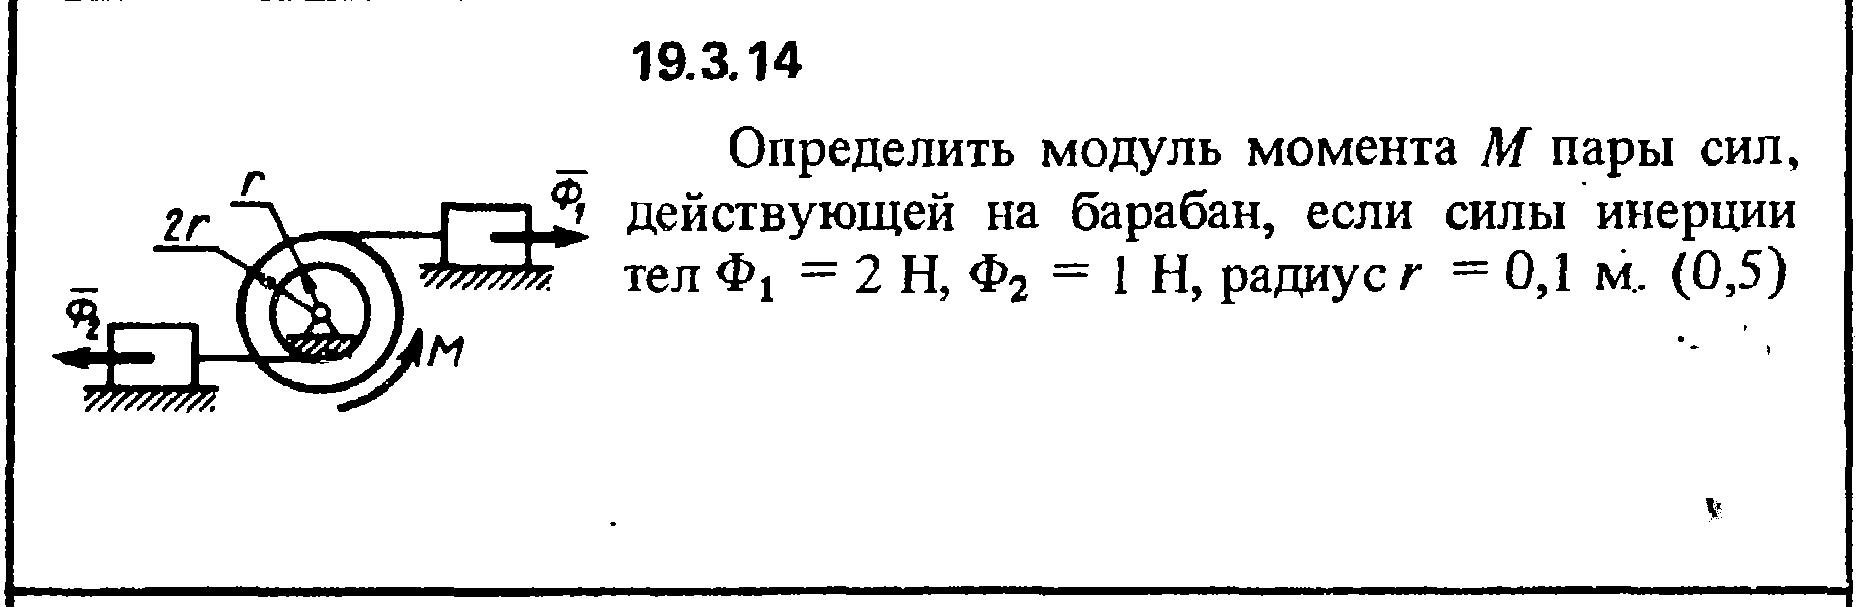 Решение 19.3.14 из сборника (решебника) Кепе О.Е. 1989